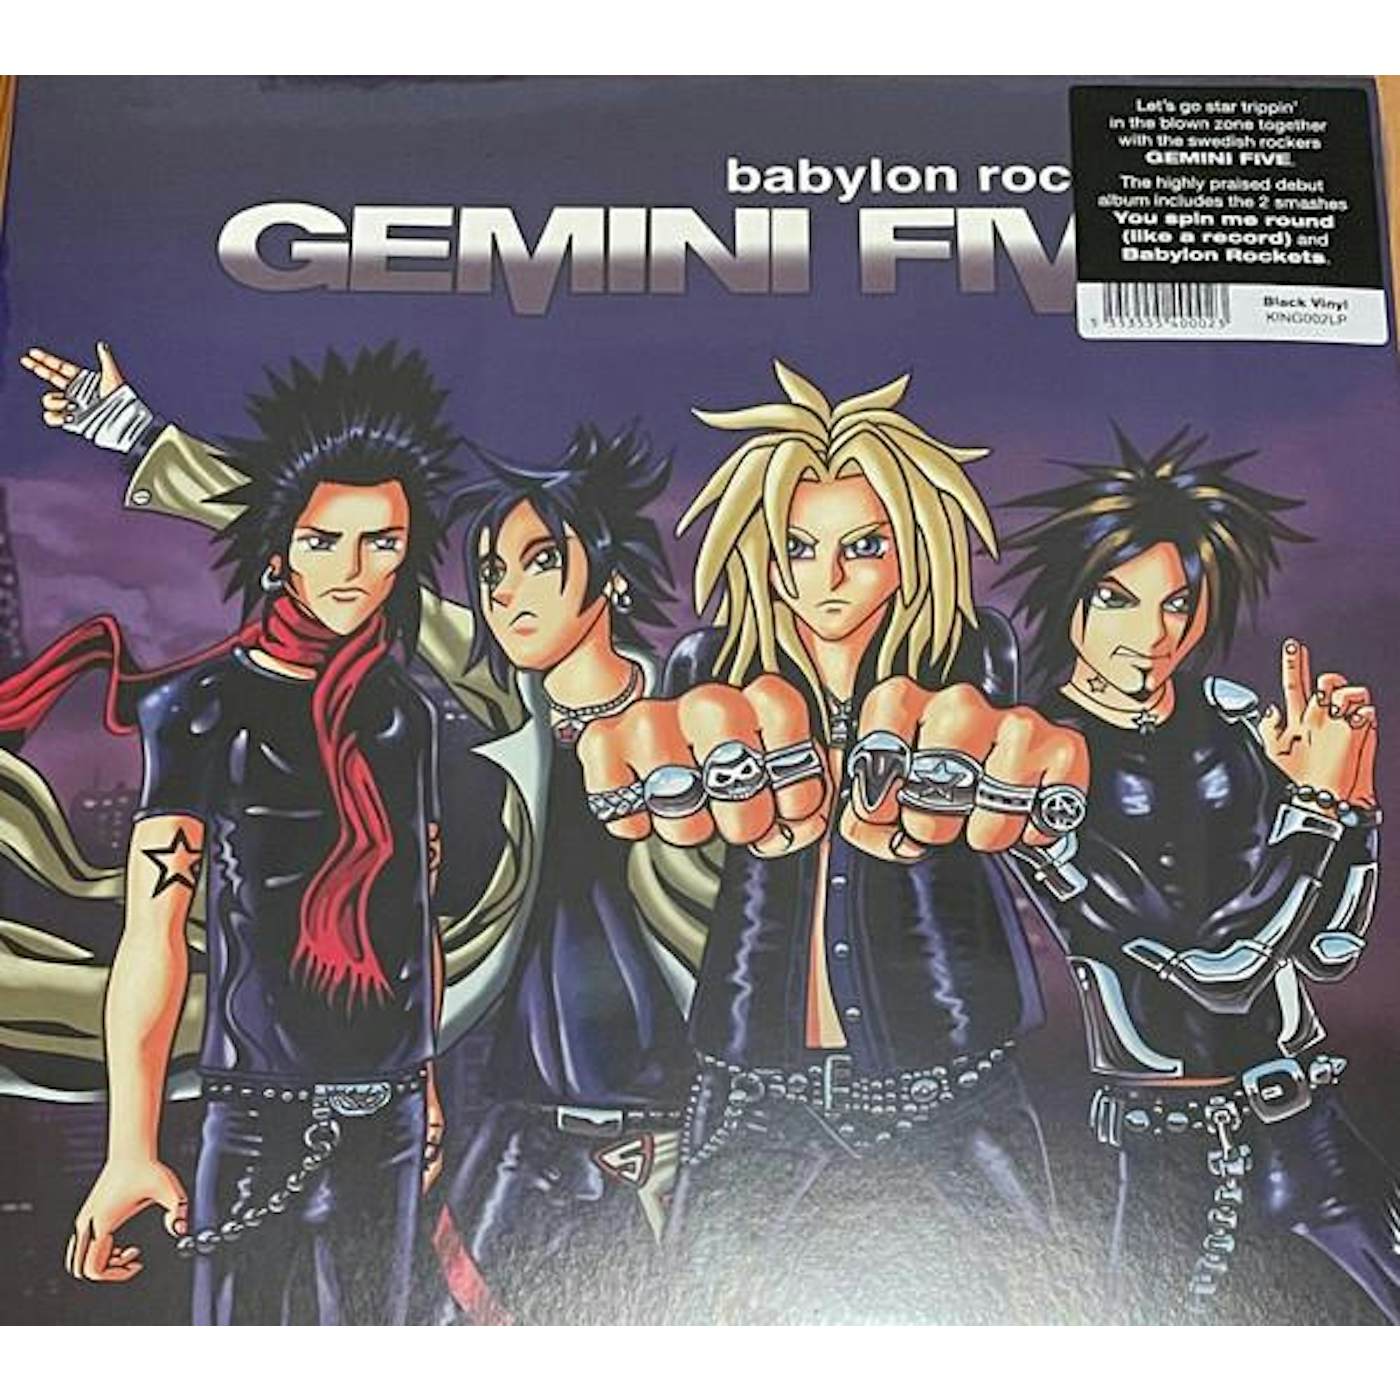 Gemini Five Babylon Rockets Vinyl Record